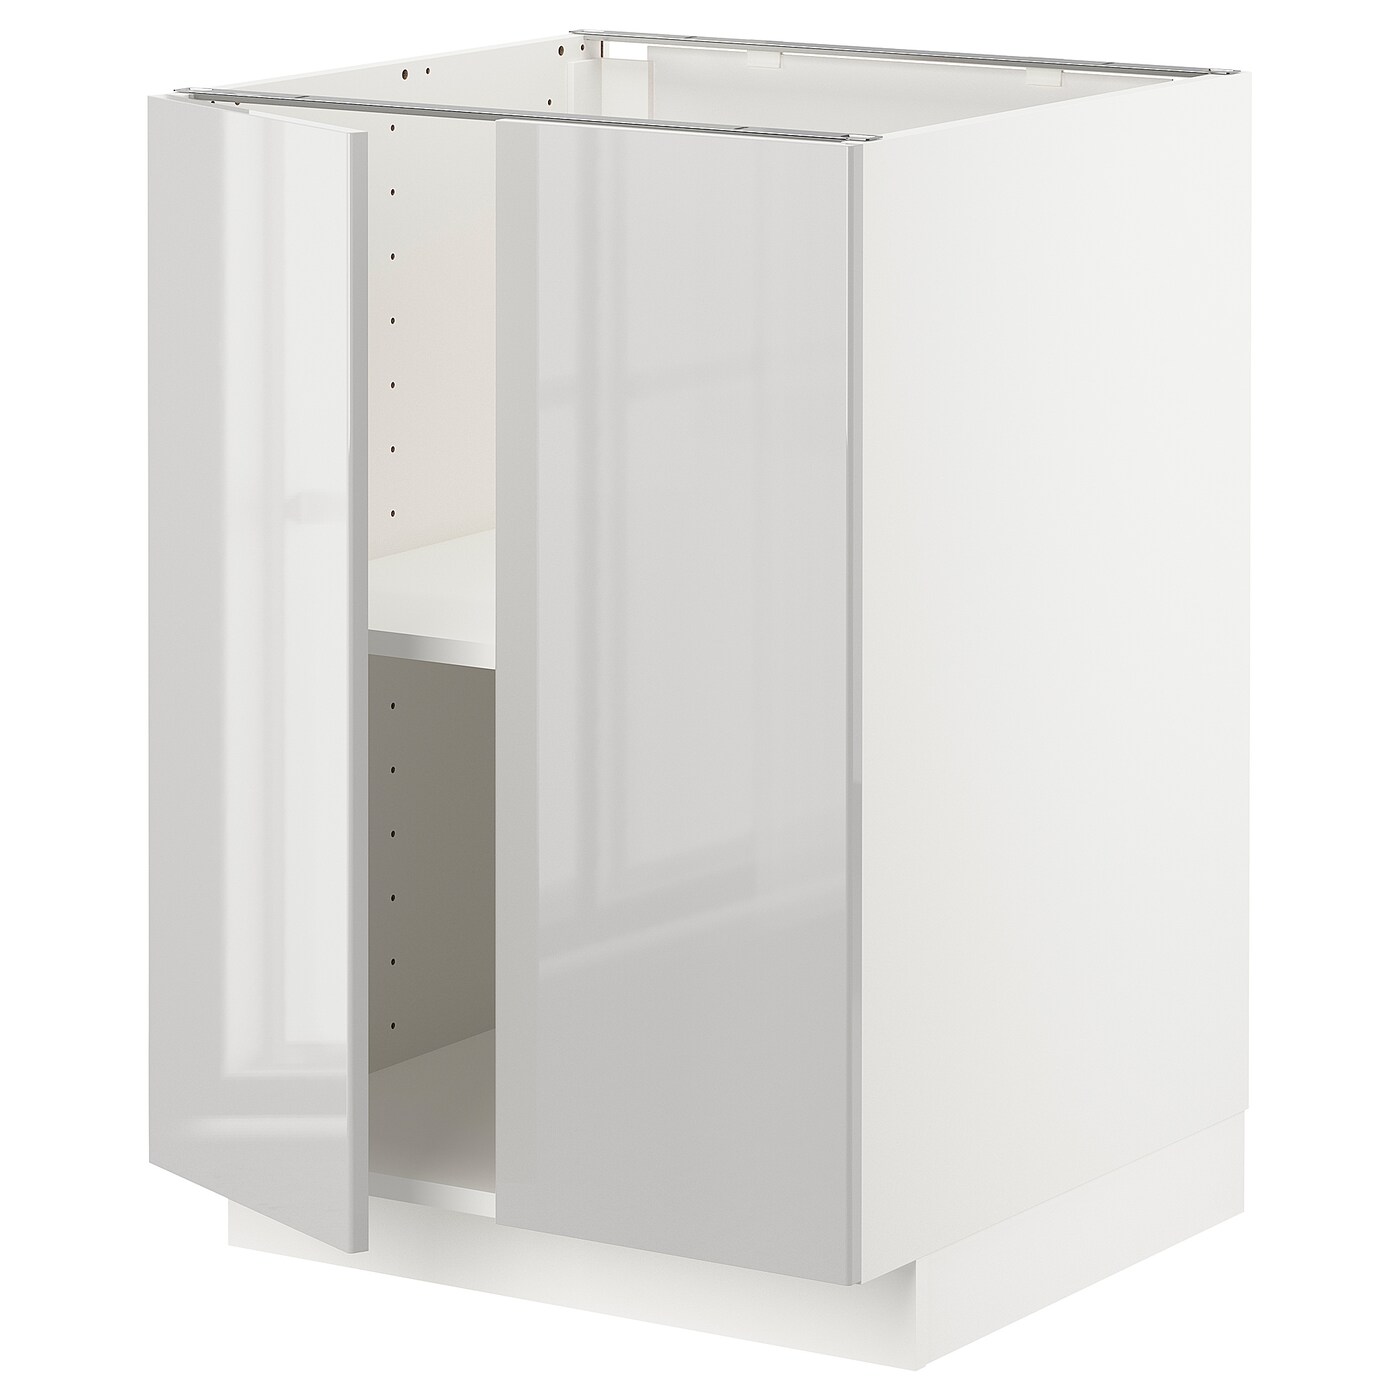 Напольный шкаф - METOD IKEA/ МЕТОД ИКЕА,  88х60 см, белый/светло-серый